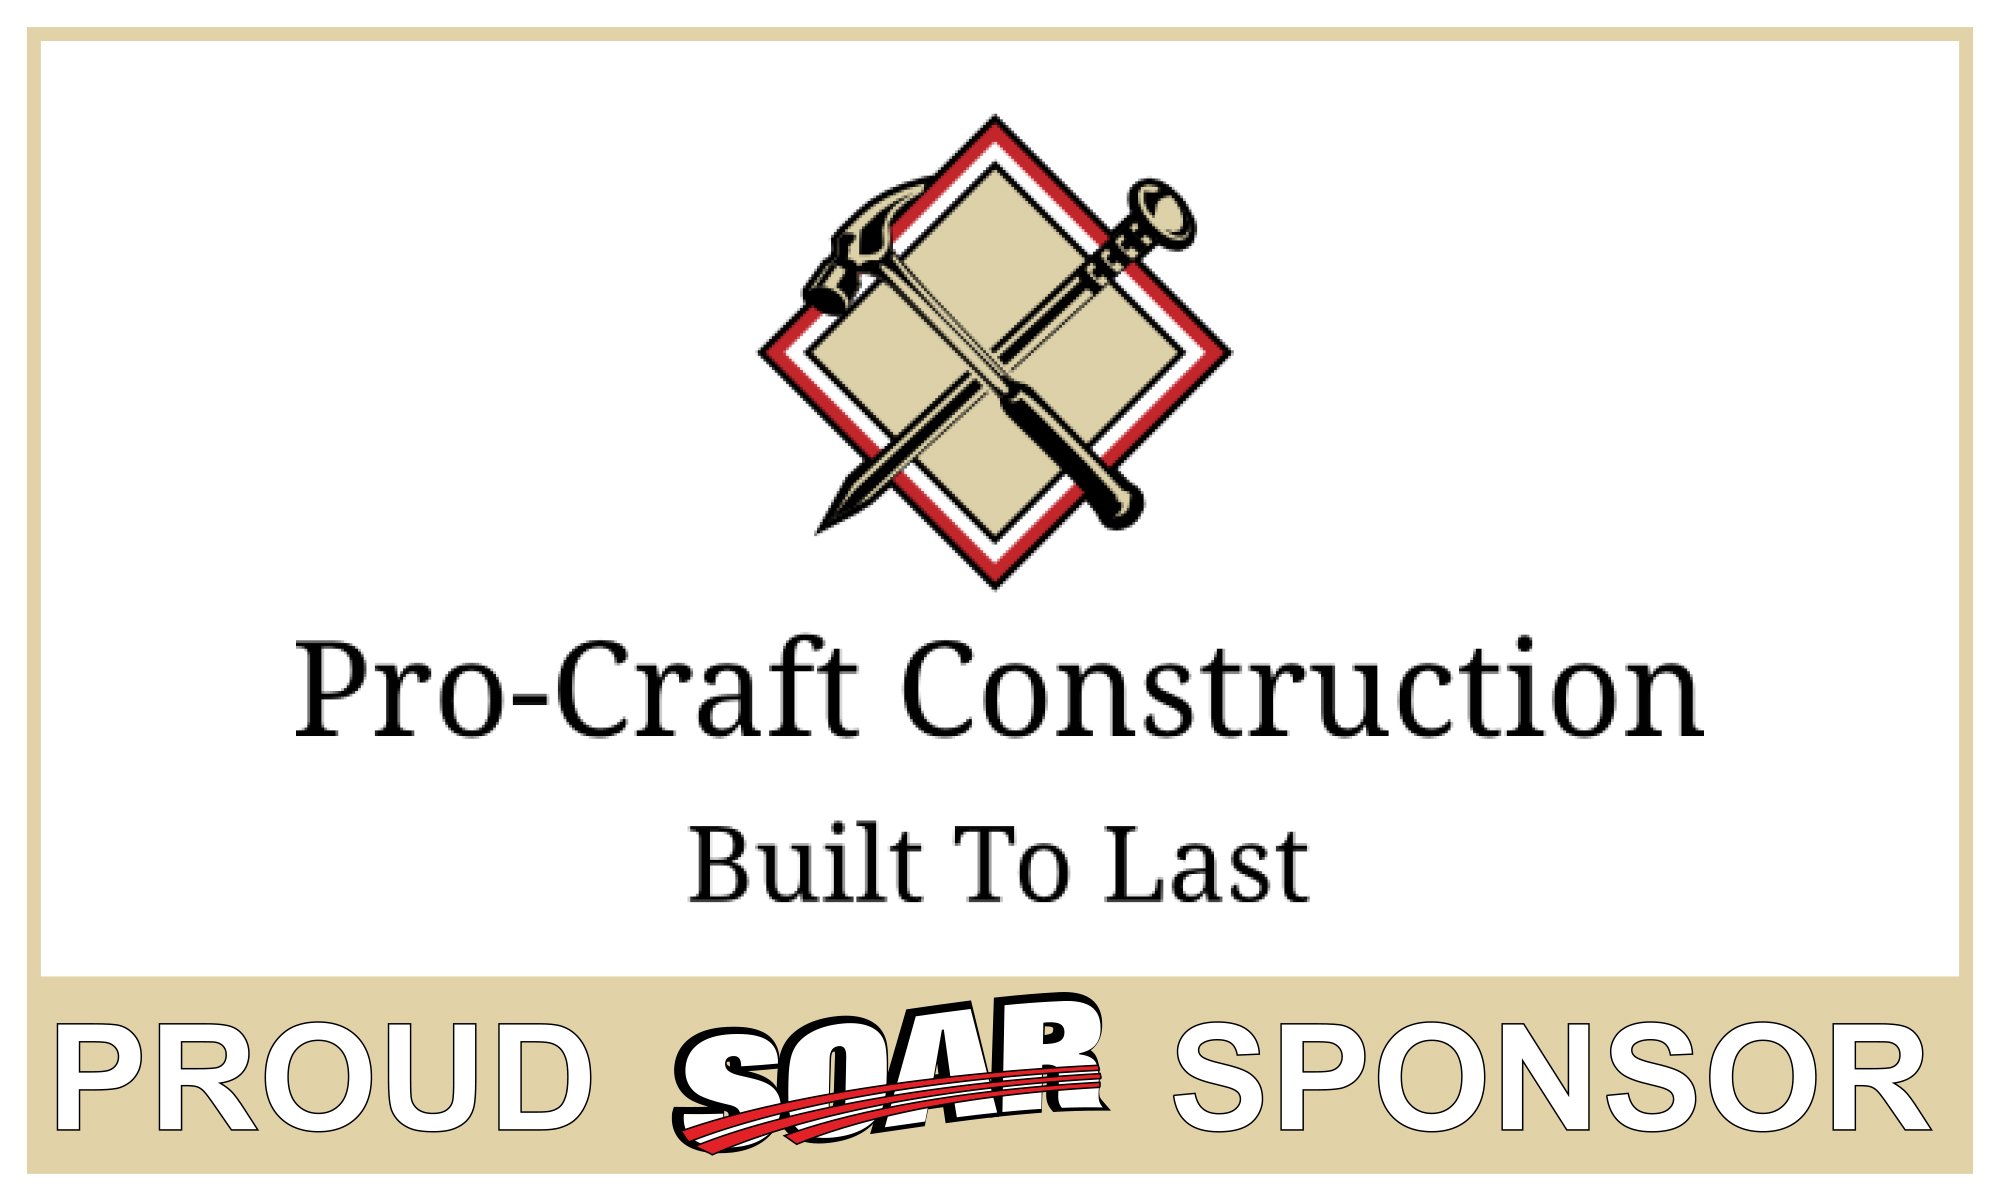 Pro Craft Construction Sponsor banner.jpg